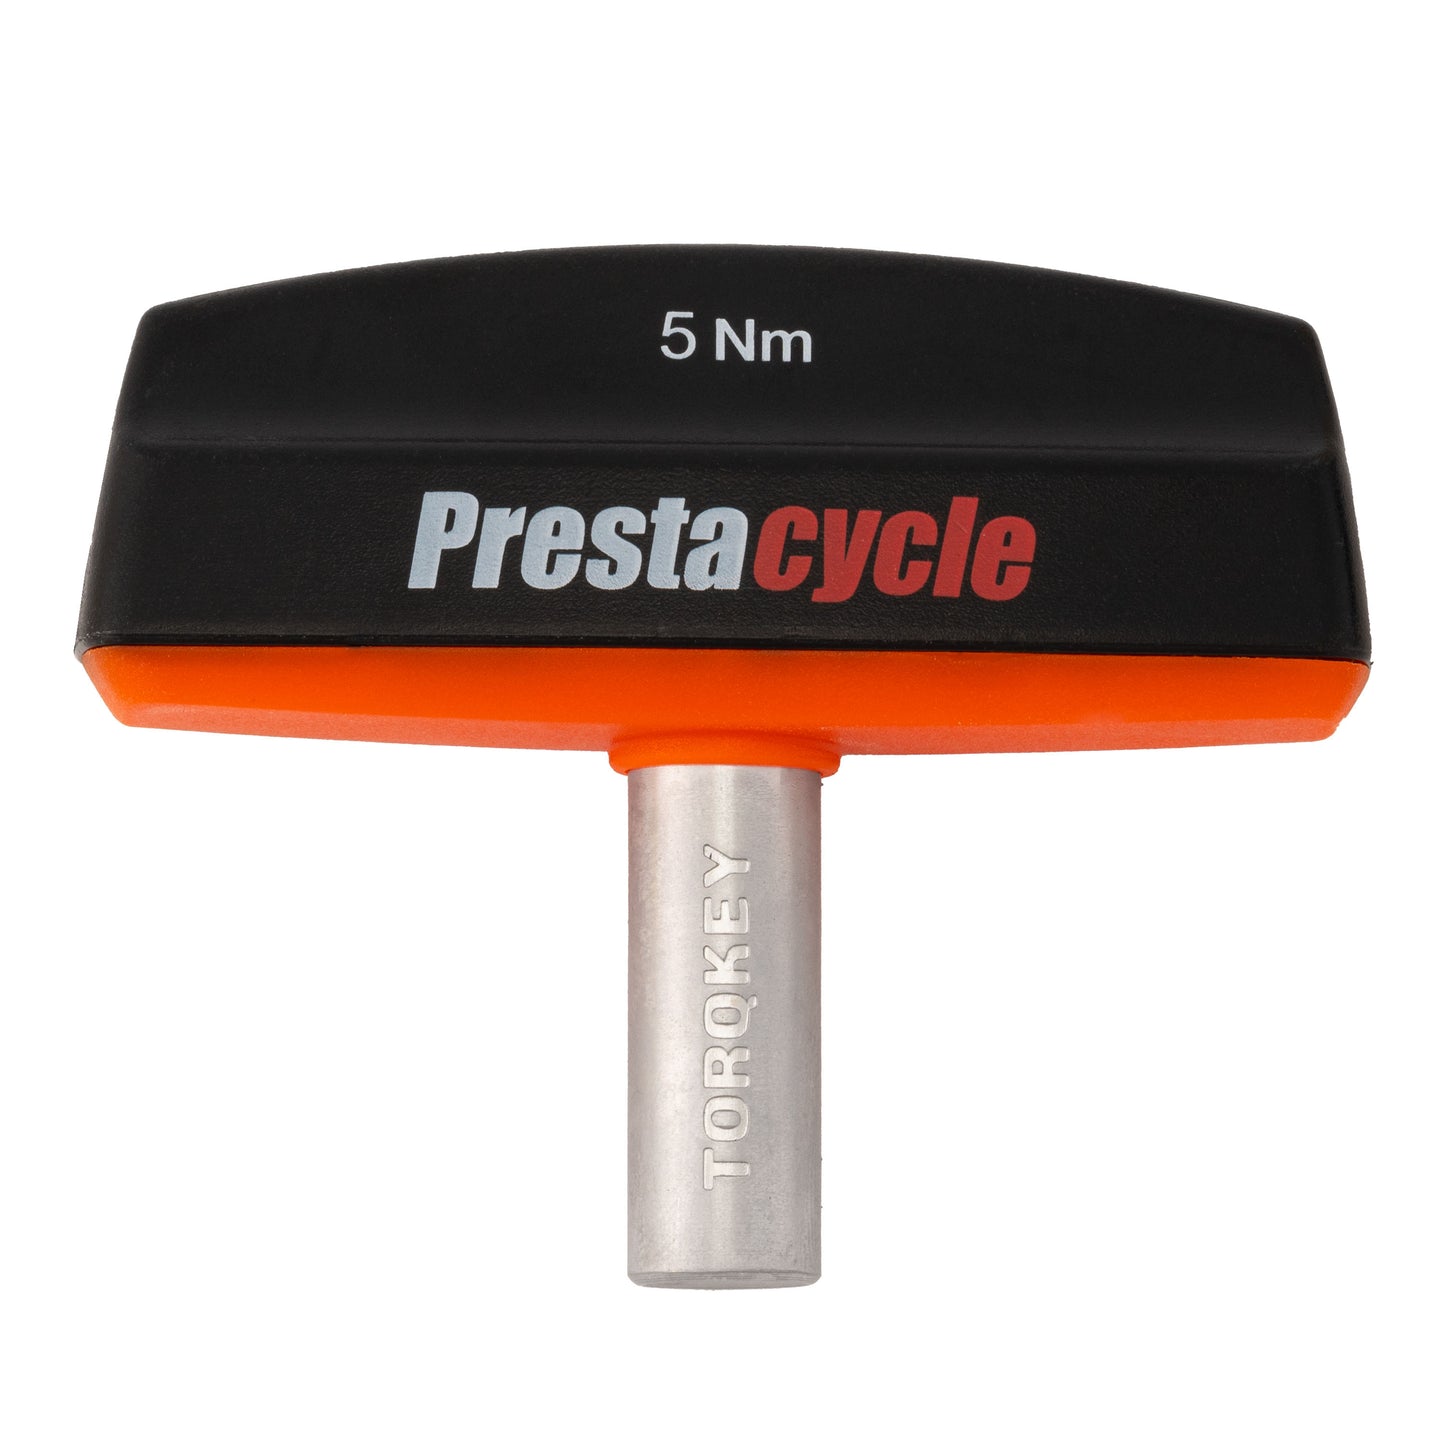 Prestacycle Pro TorqKeys - 5Nm T-Handle Torque-Limiting Bits Tool